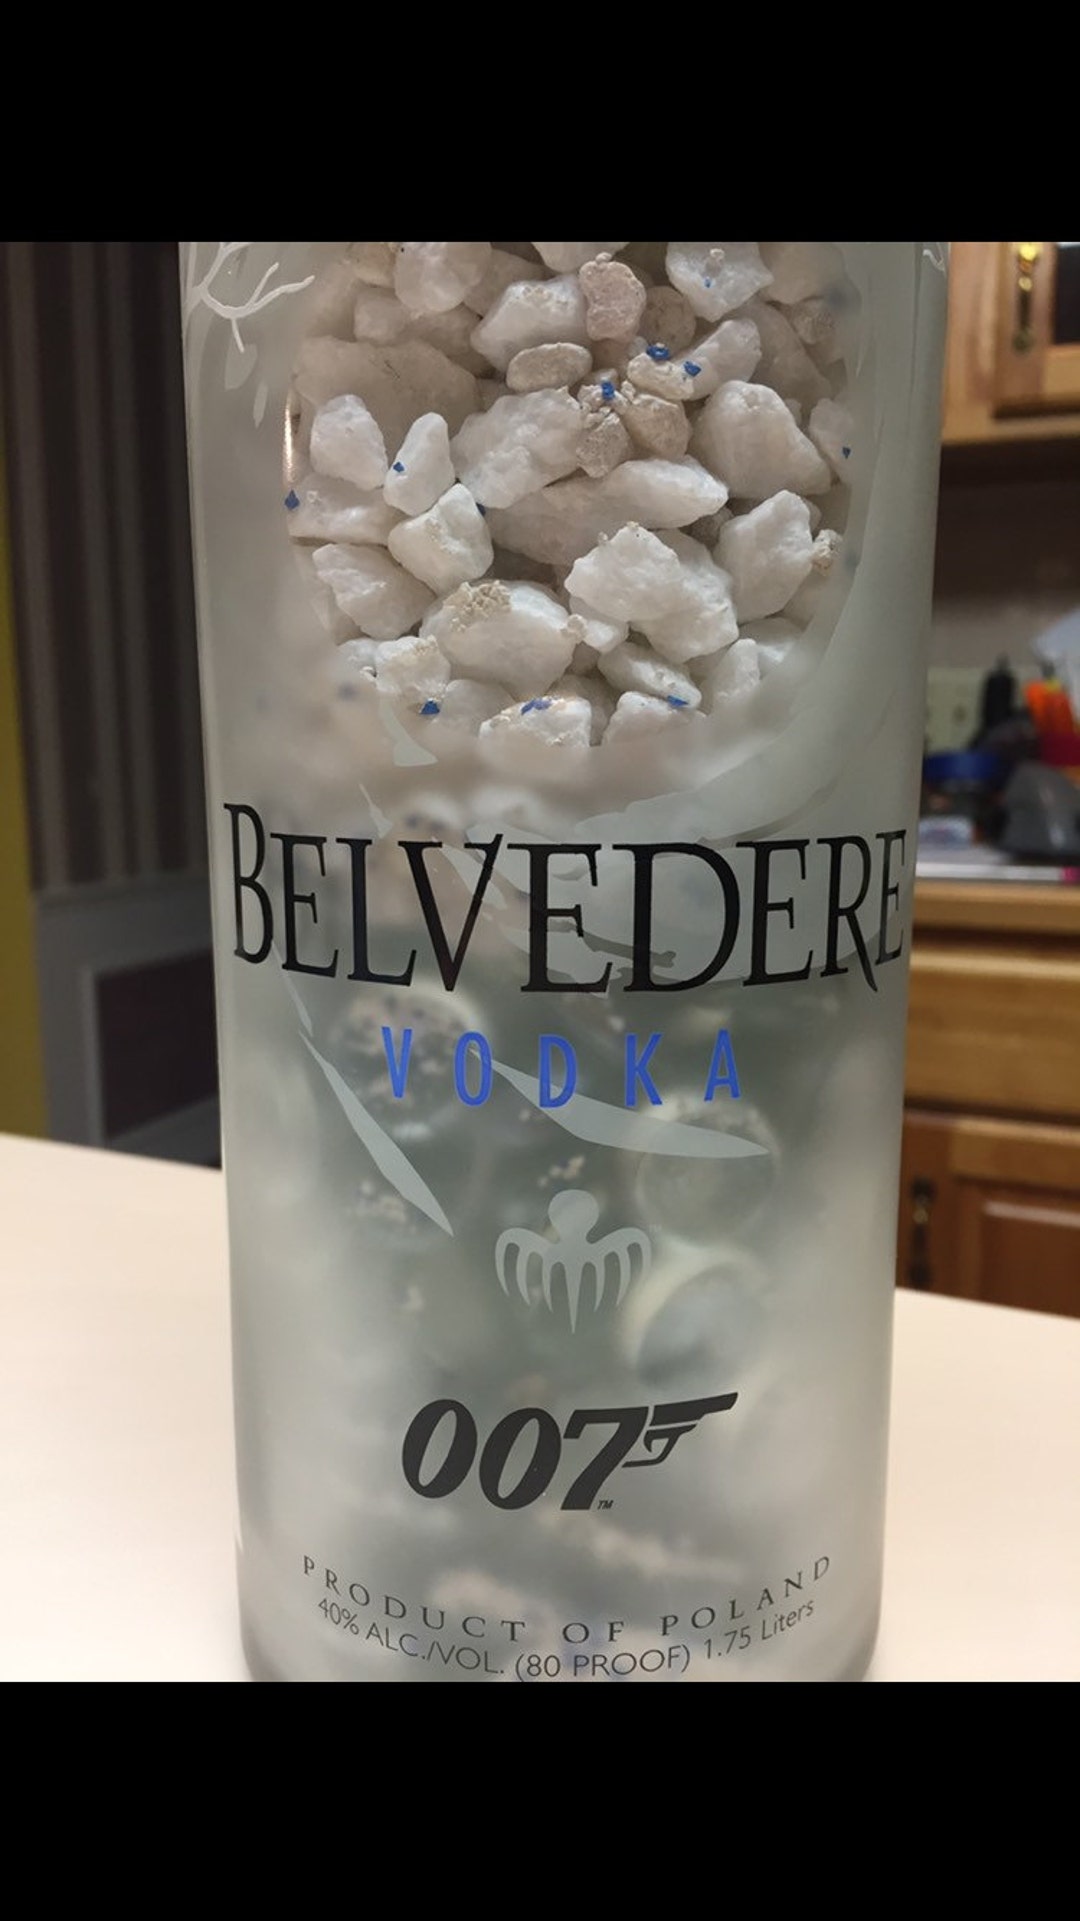 Belvedere 007 SPECTRE Limited Edition Vodka